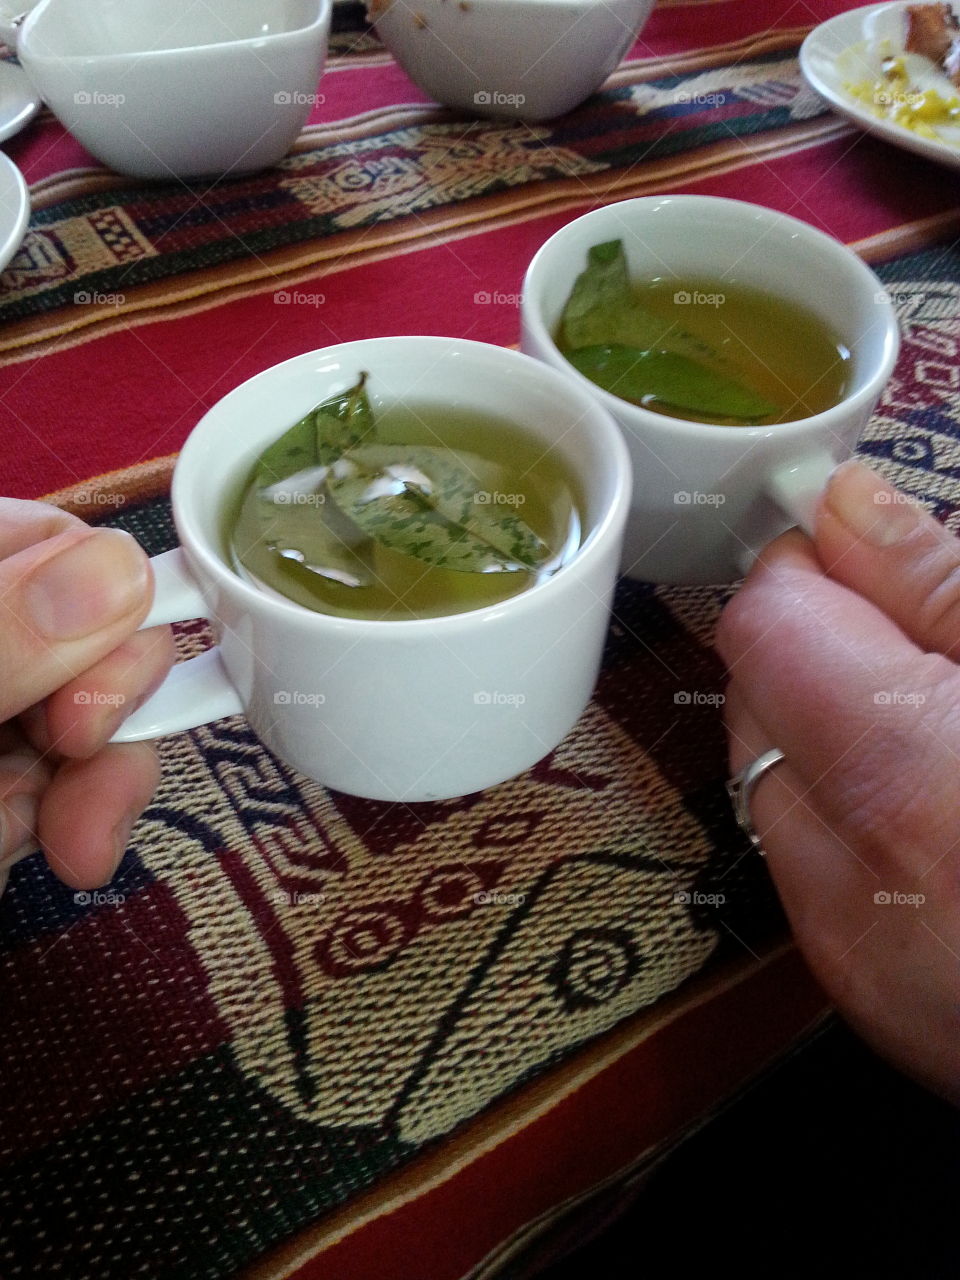 A toast to Peru with some tea